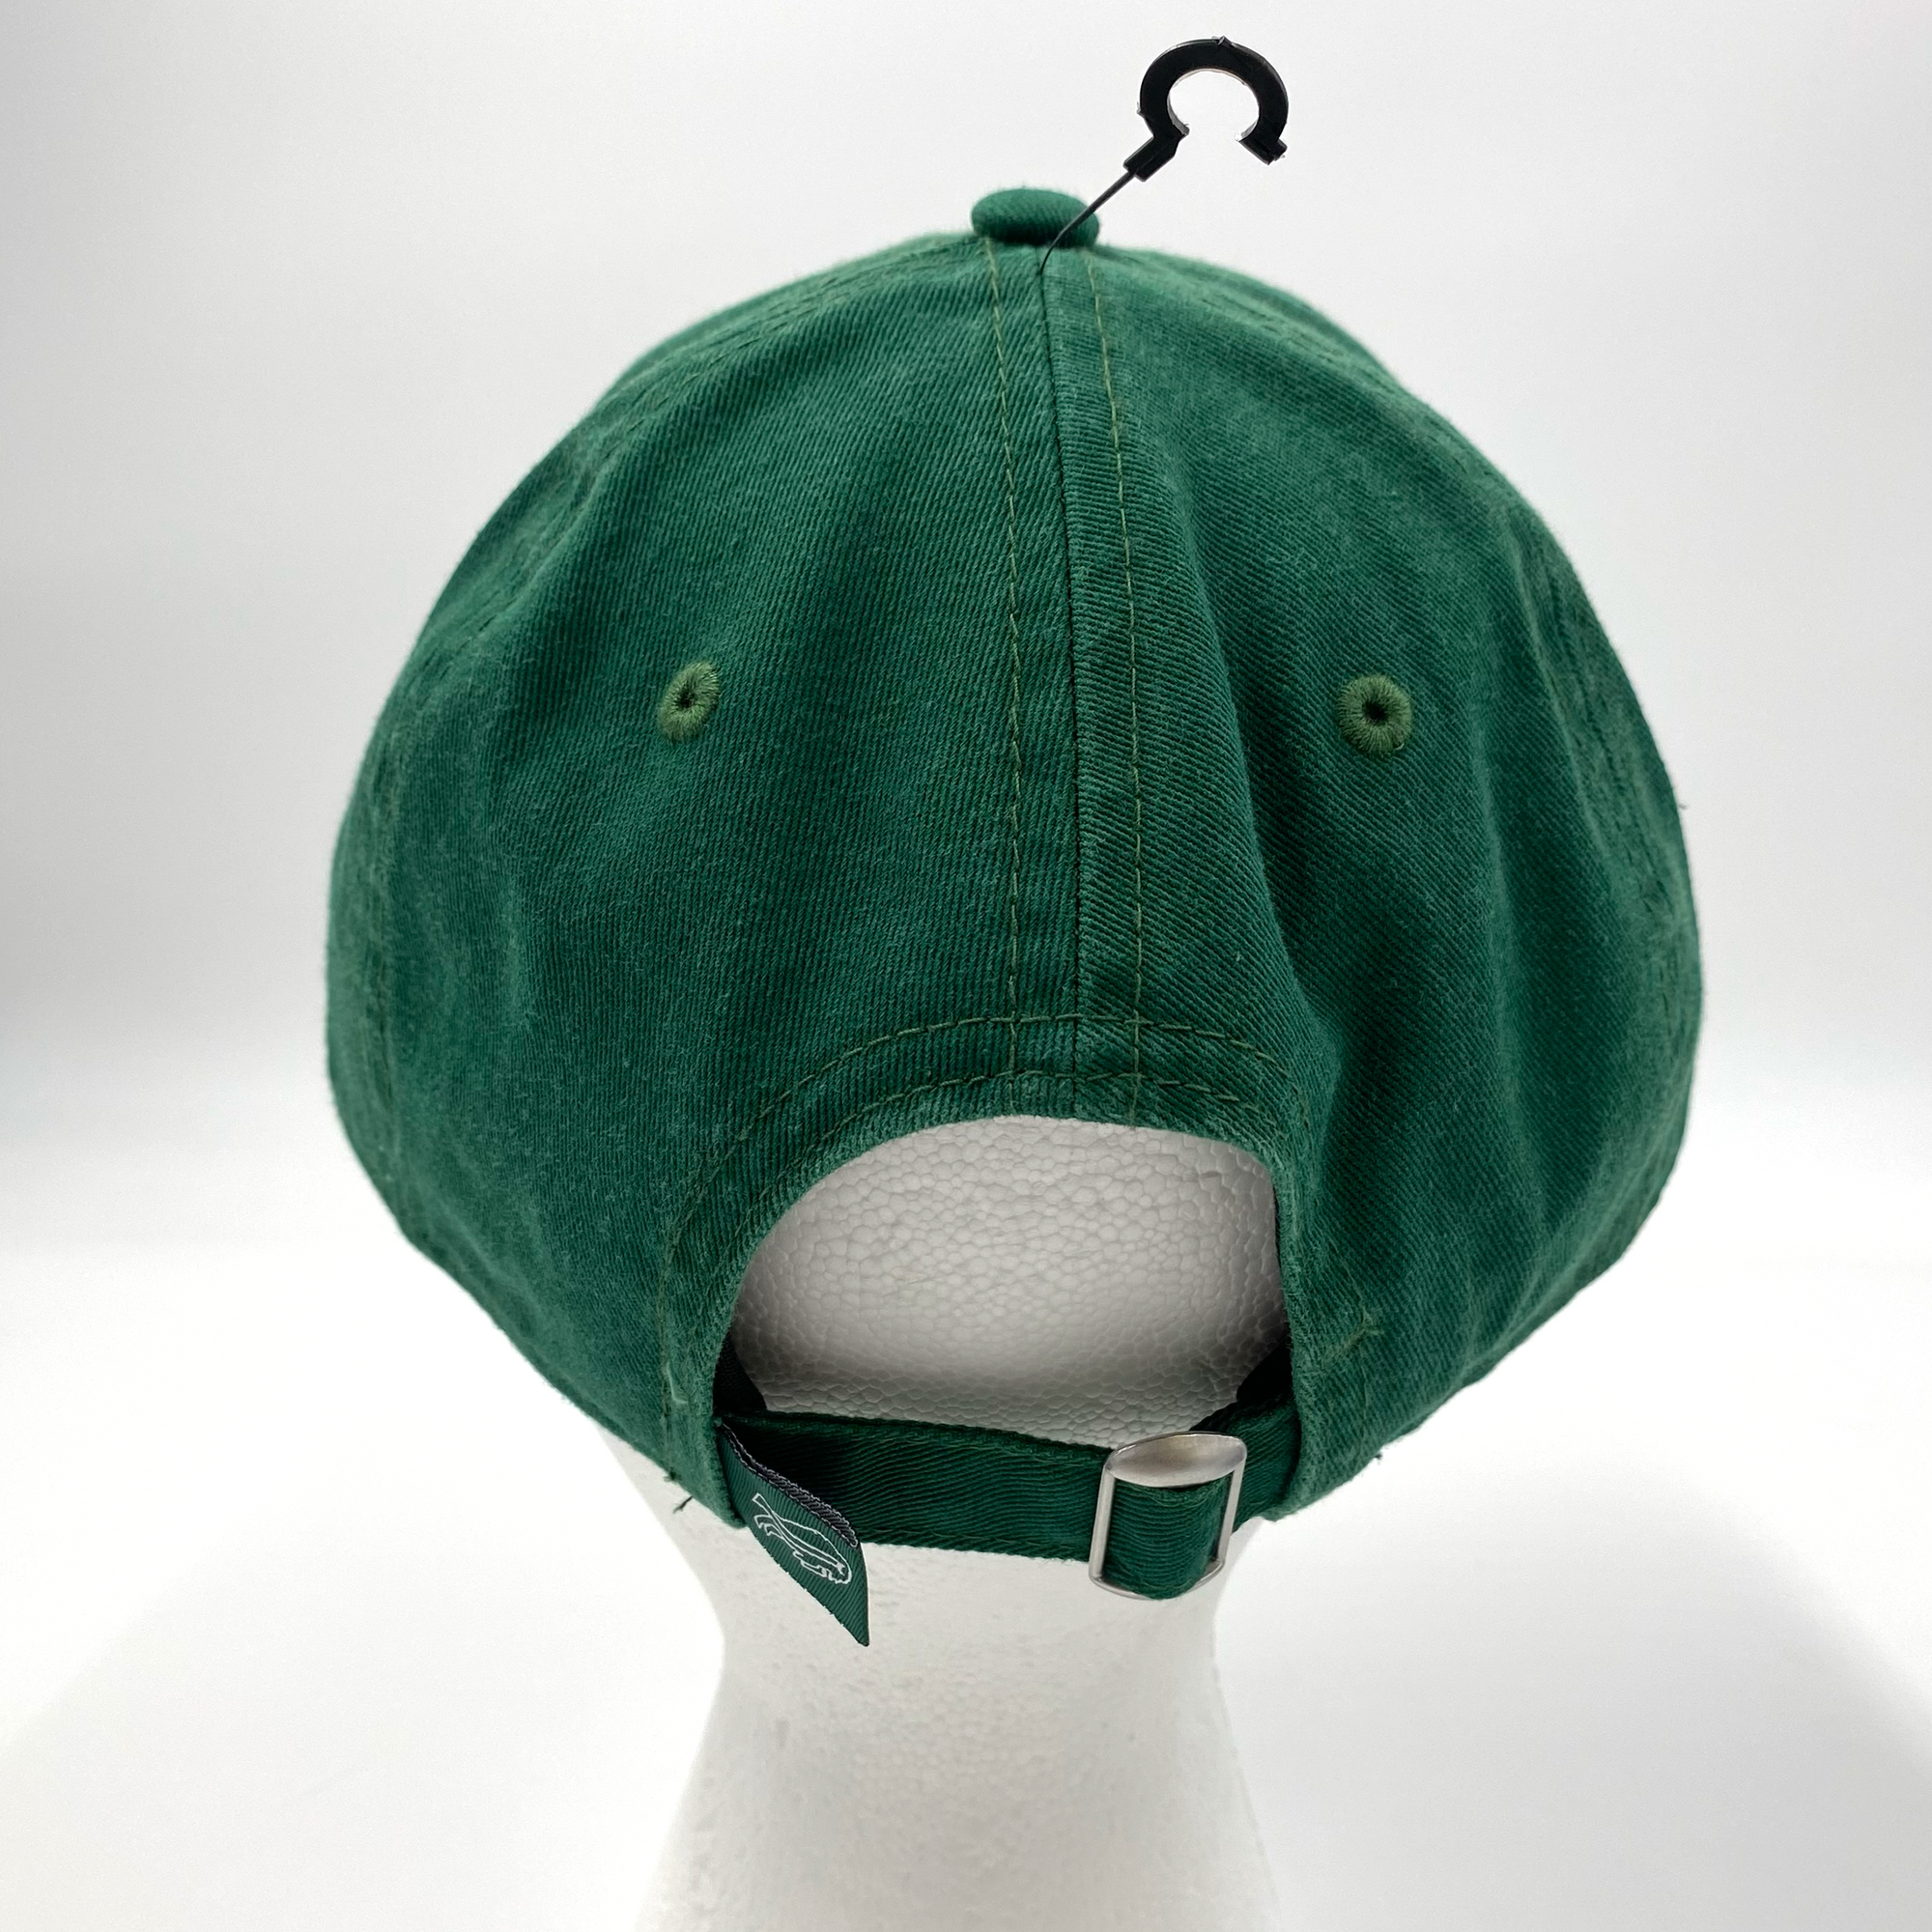 New Era Buffalo Bills With Crest Green Golfer Adjustable Hat